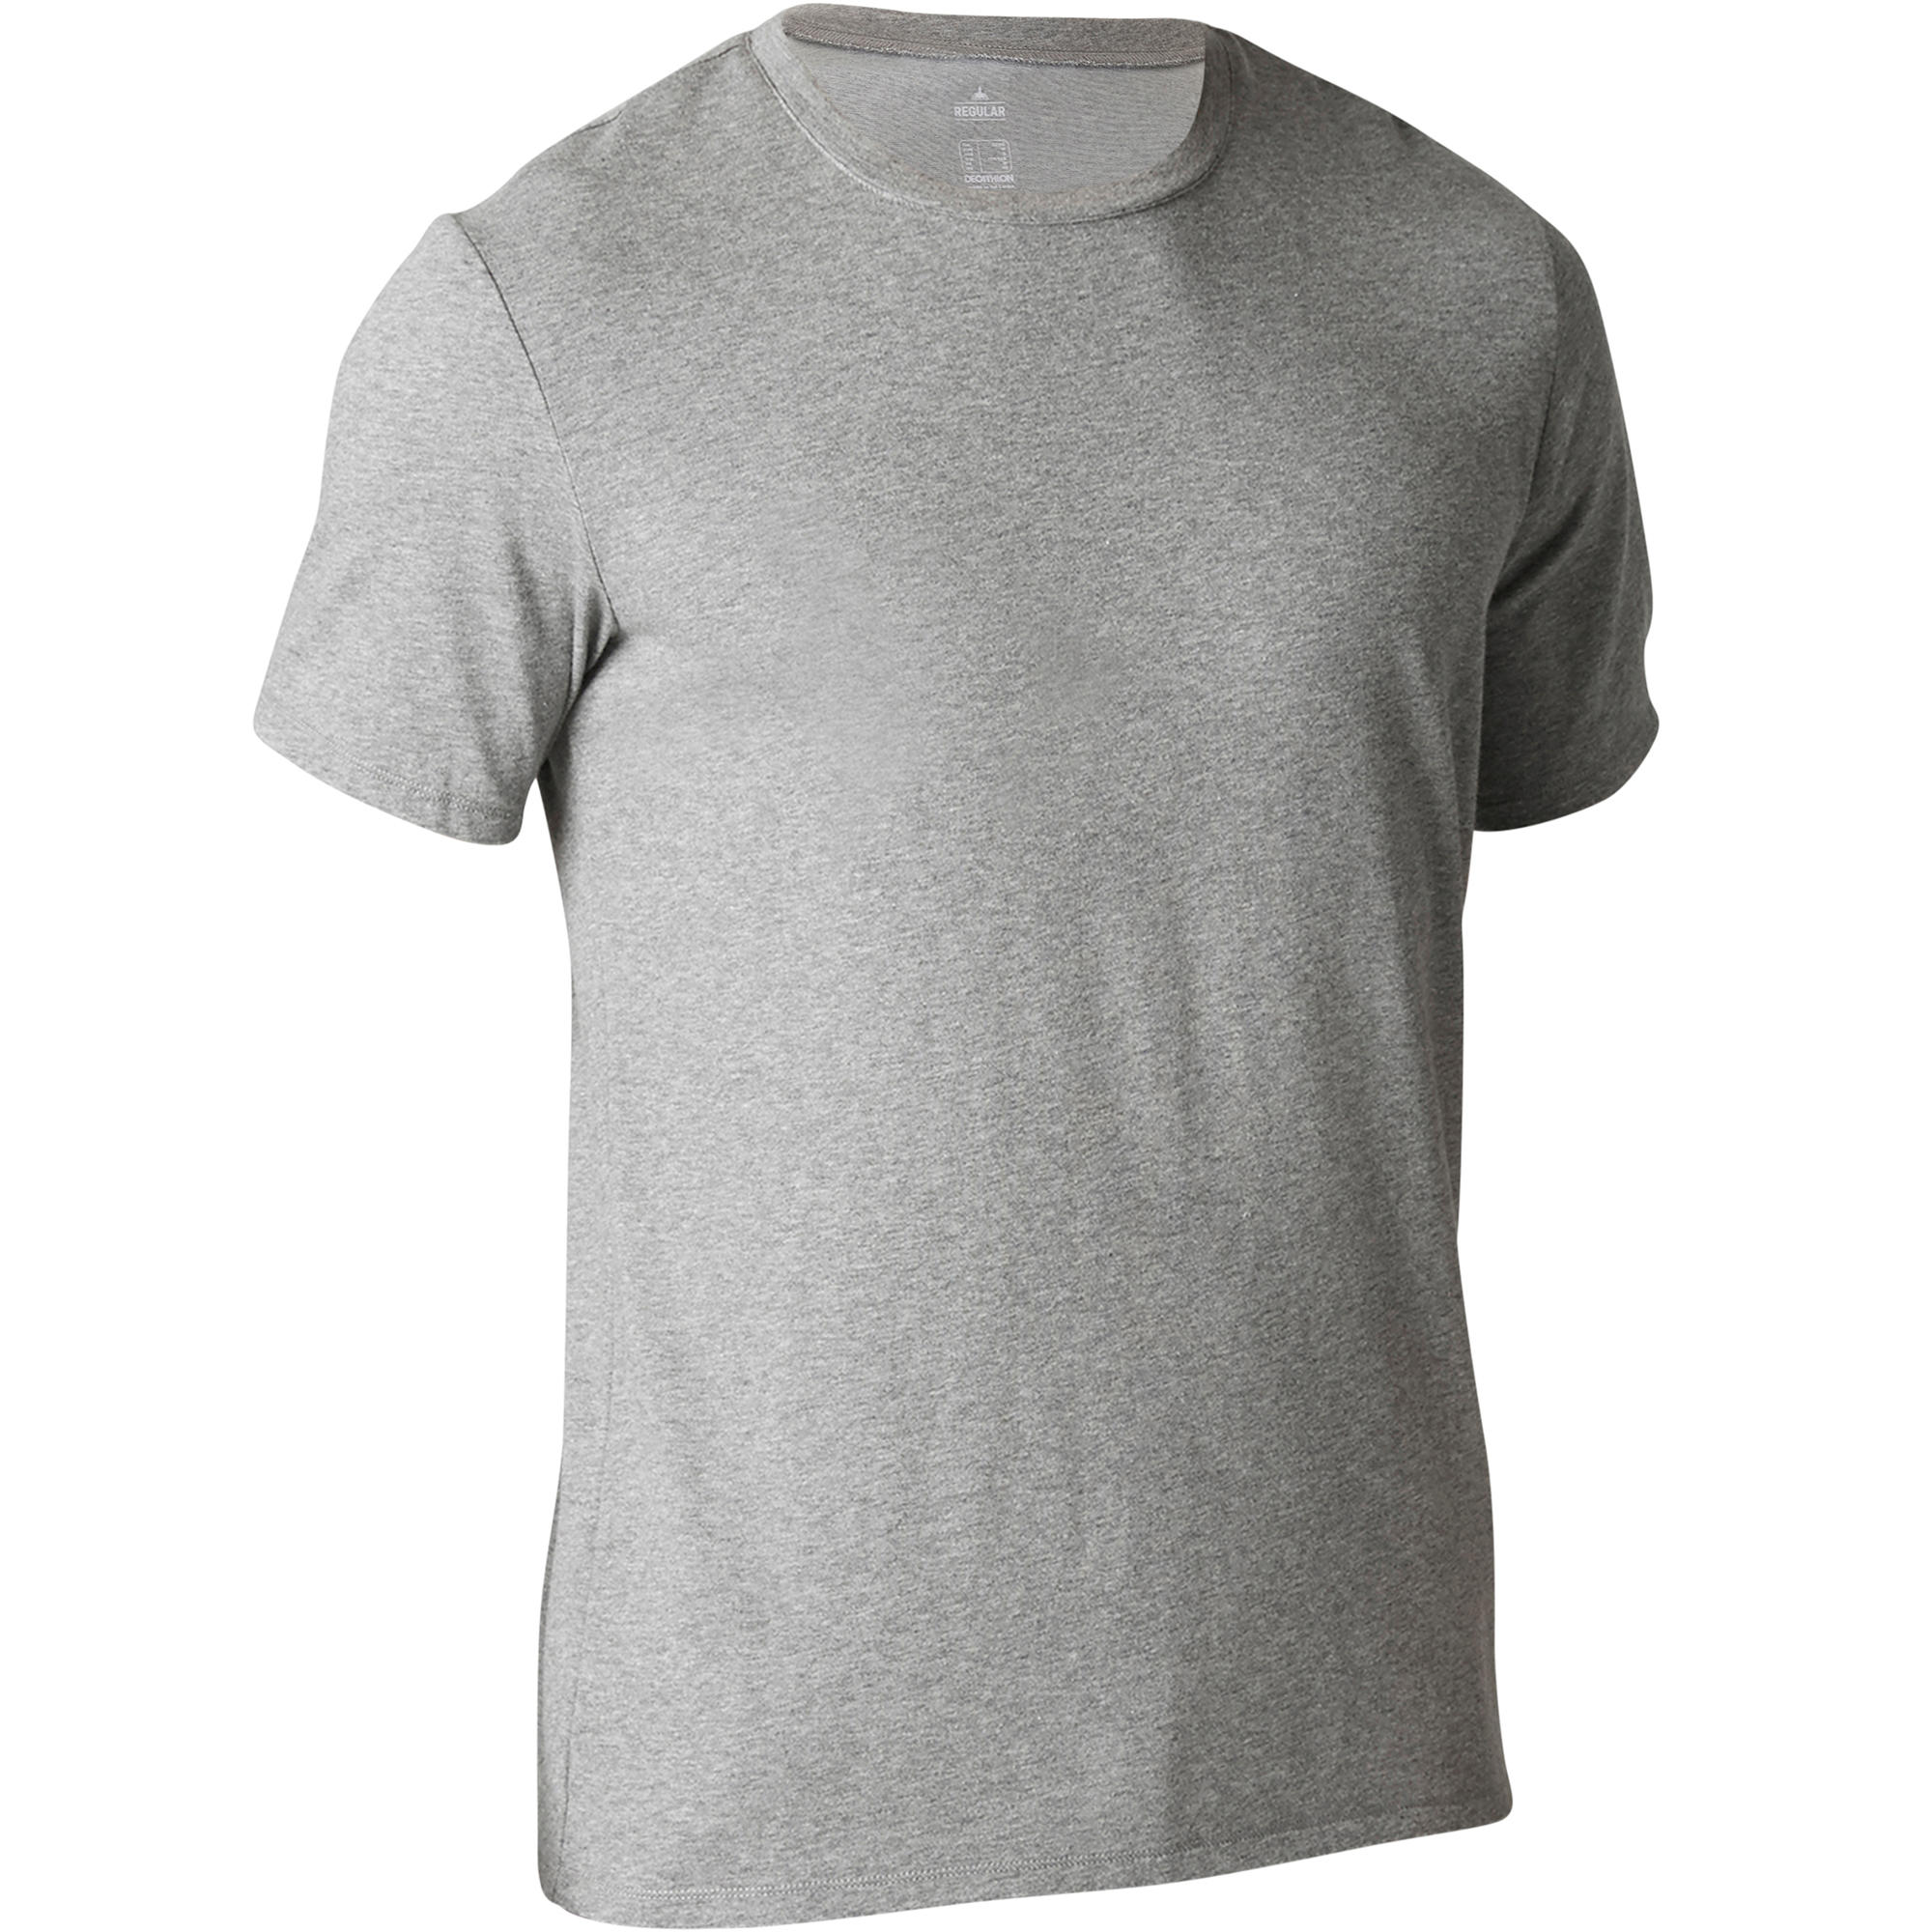 NYAMBA 500 Regular-Fit Pilates & Gentle Gym T-Shirt - Mottled Light Grey